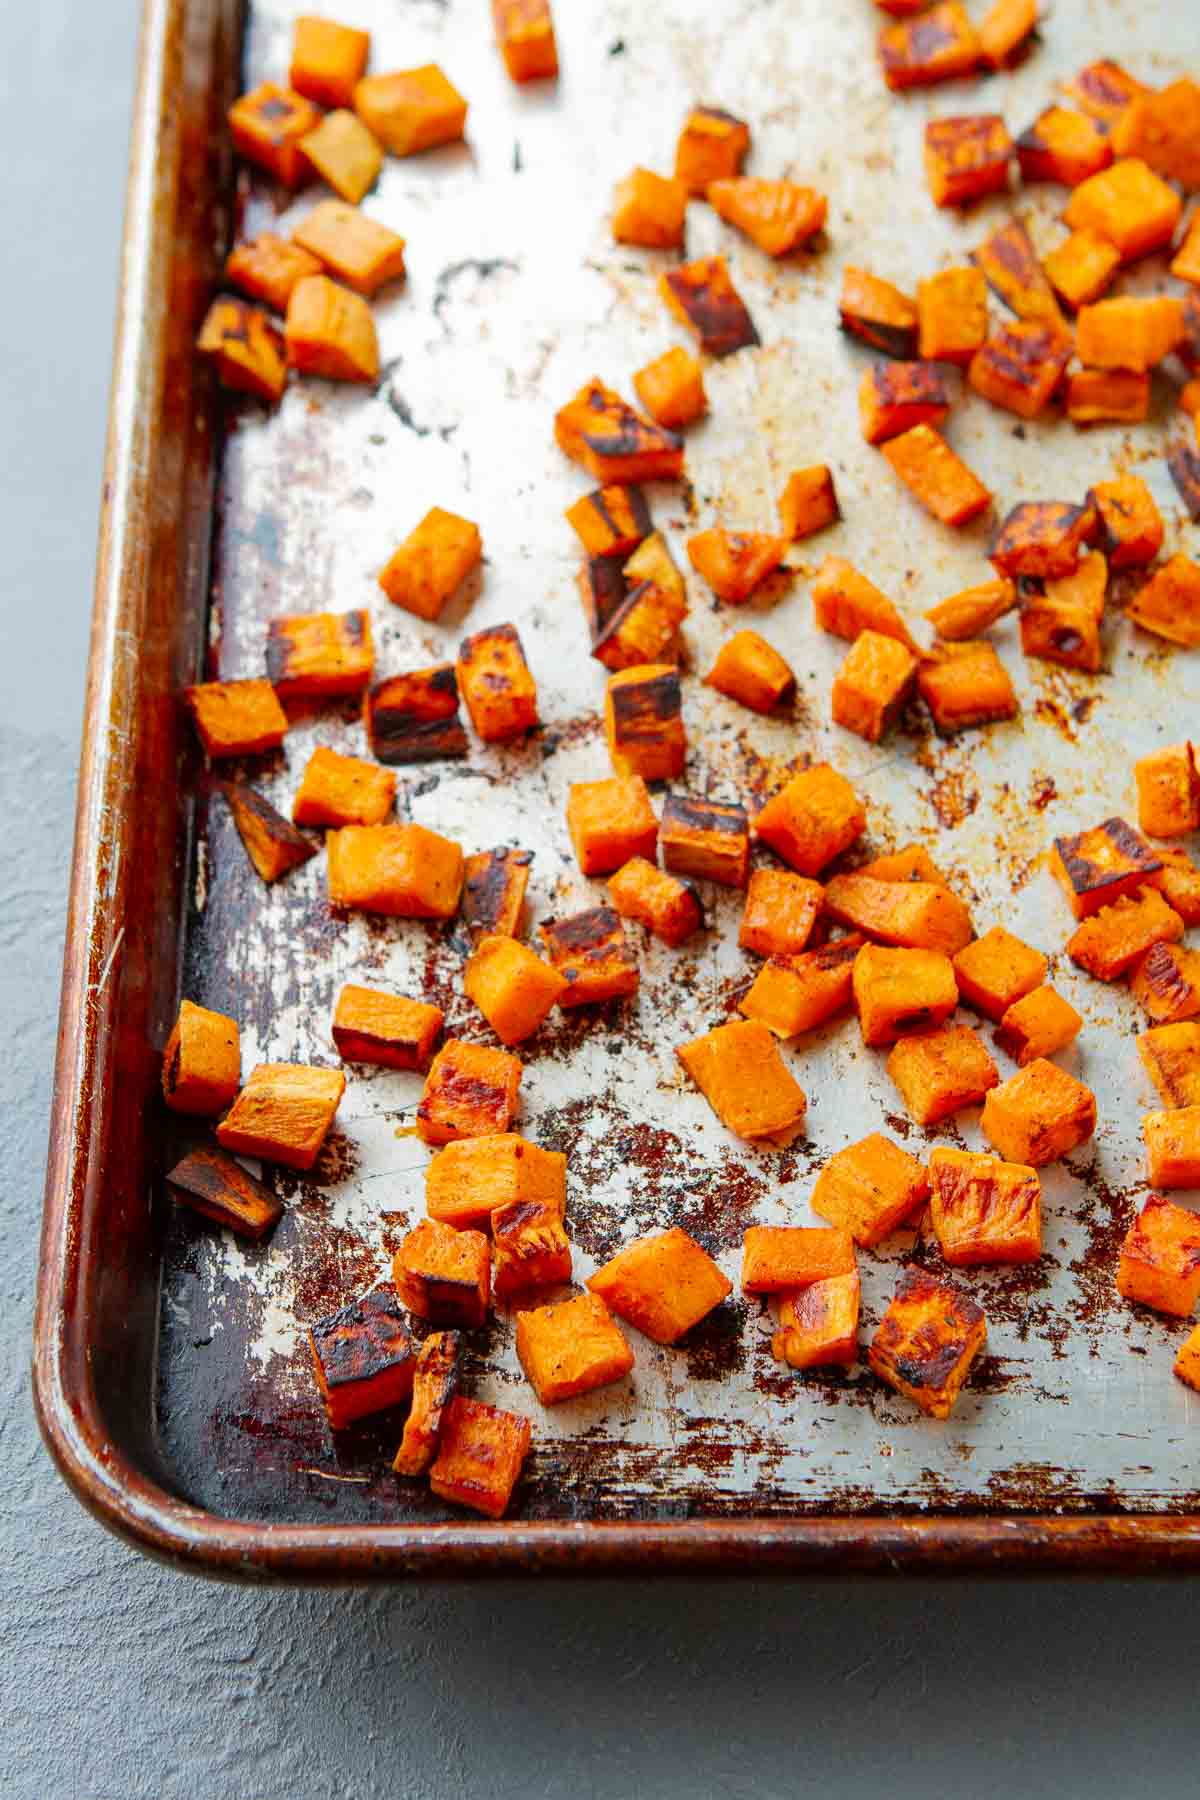 Roasted sweet potato cubes on a baking sheet.